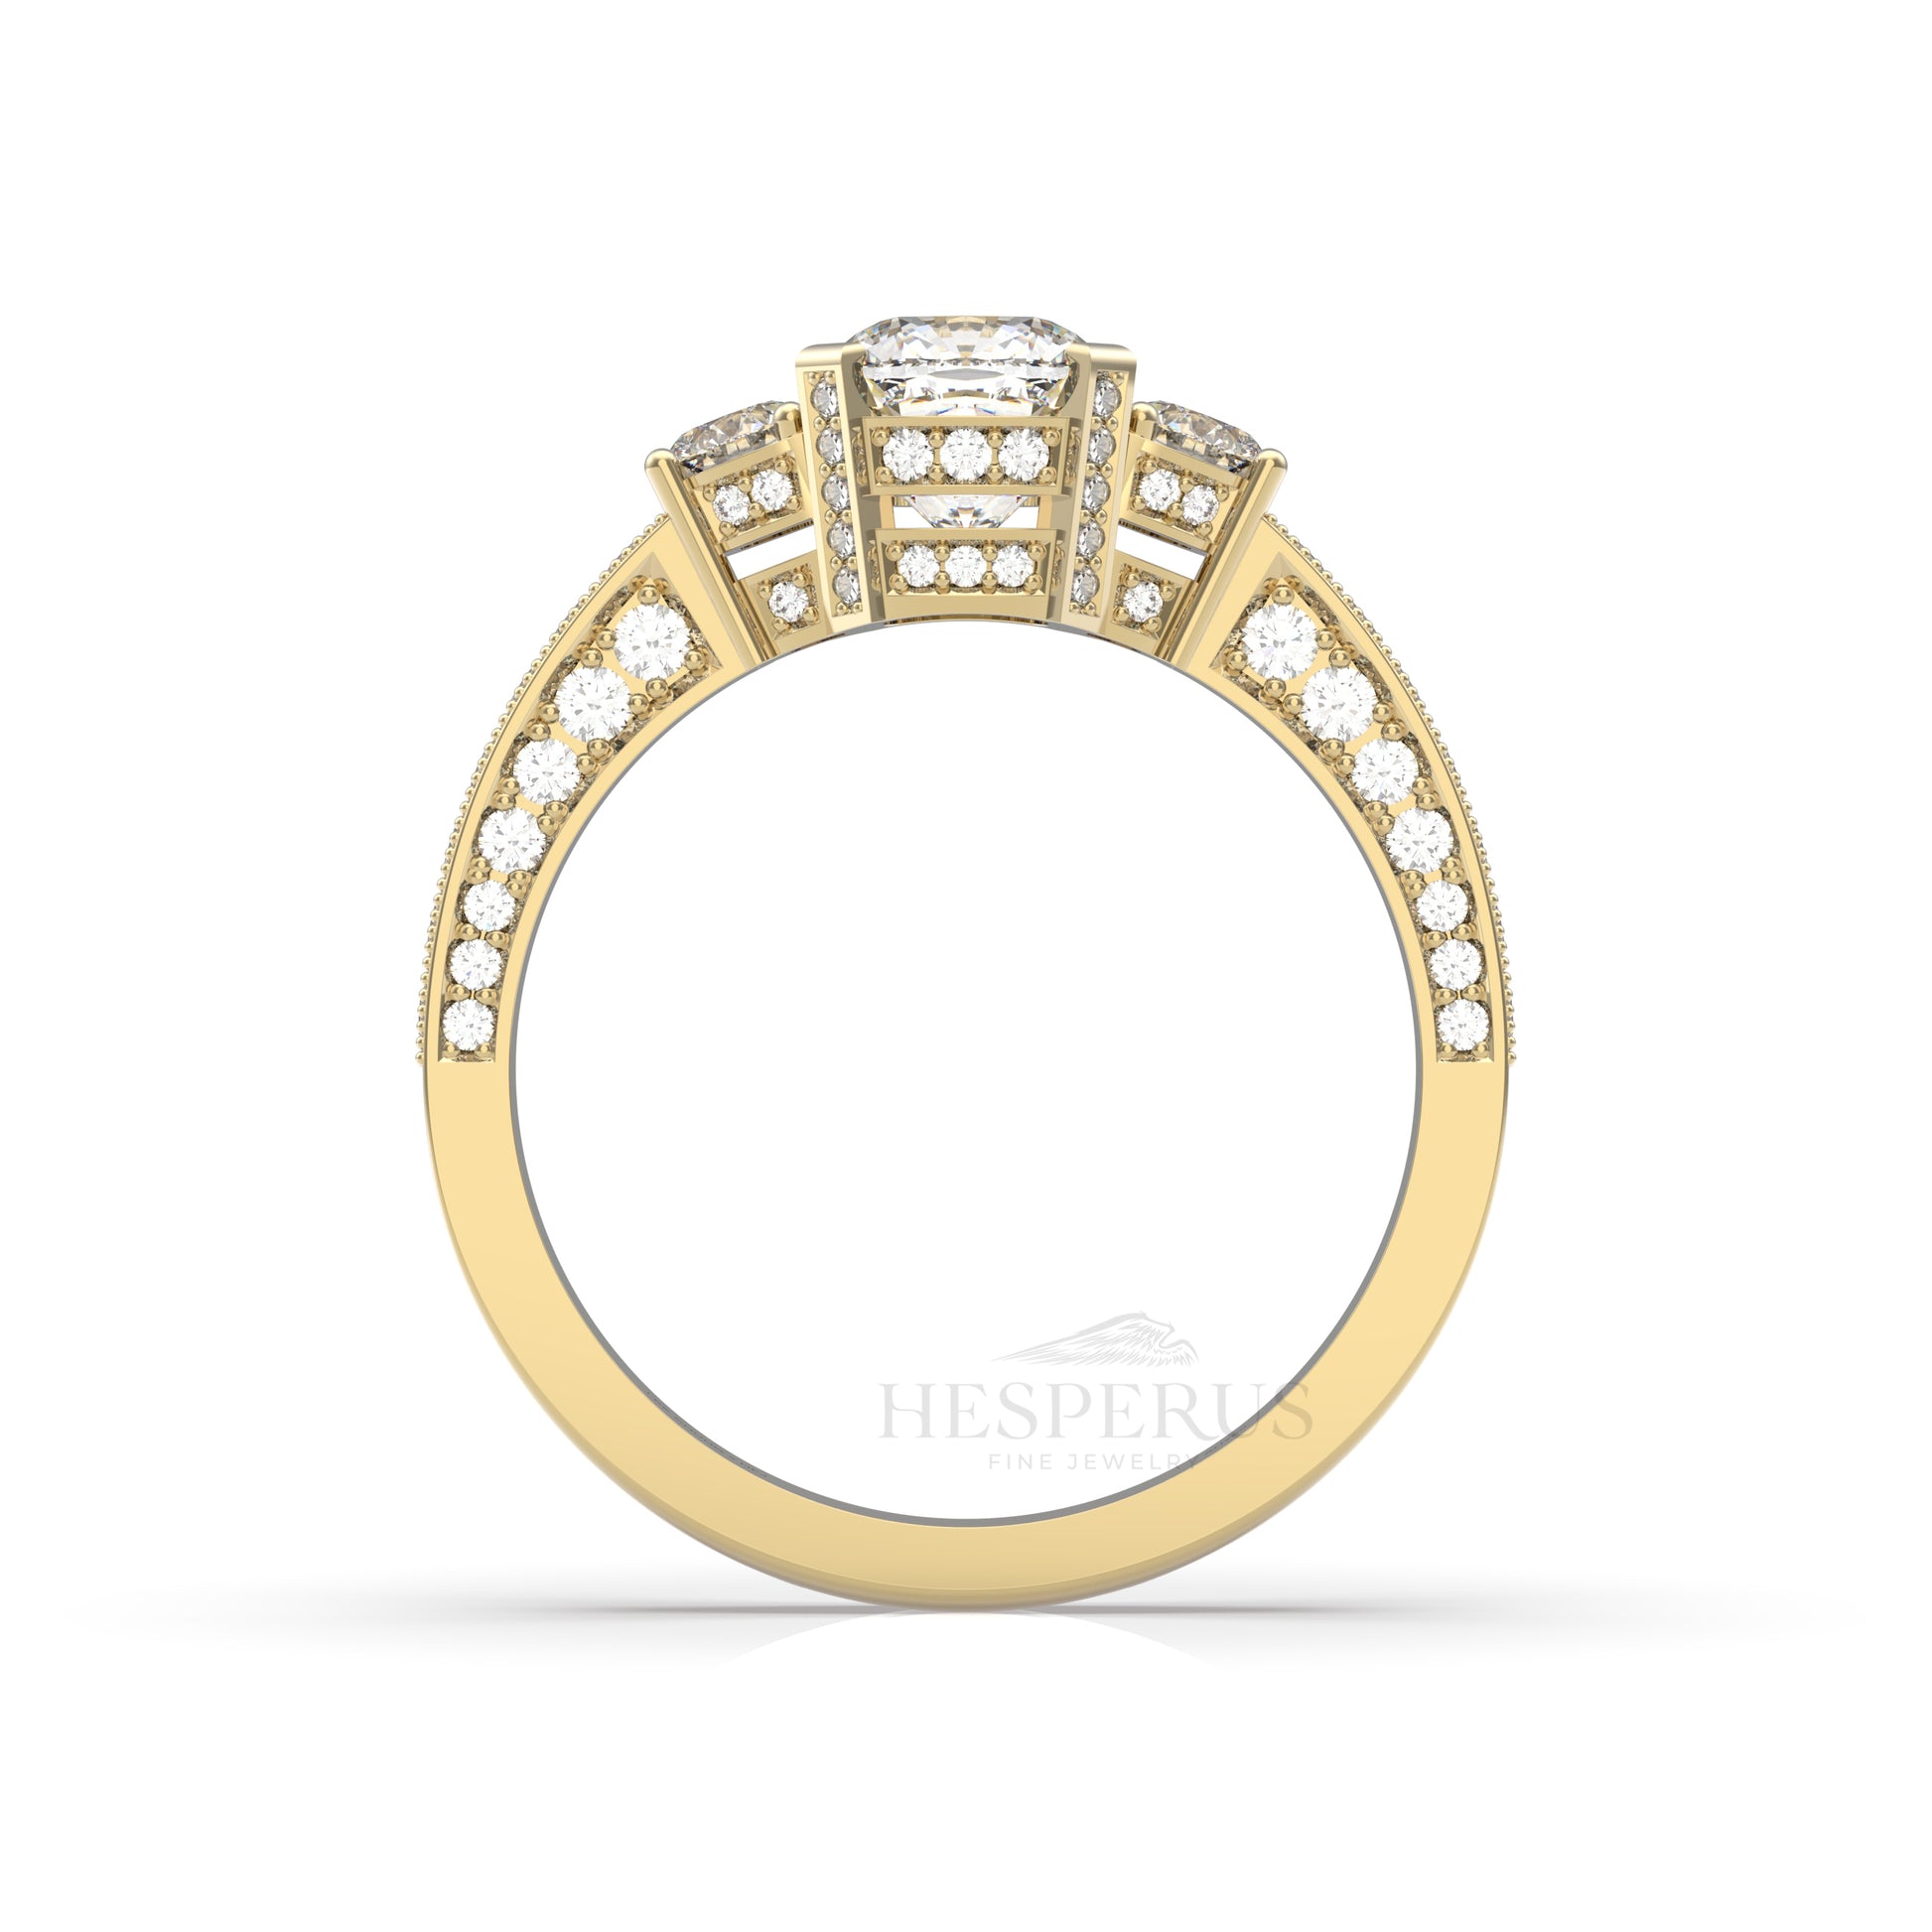 Trident Ring-Hesperus Fine Jewelry